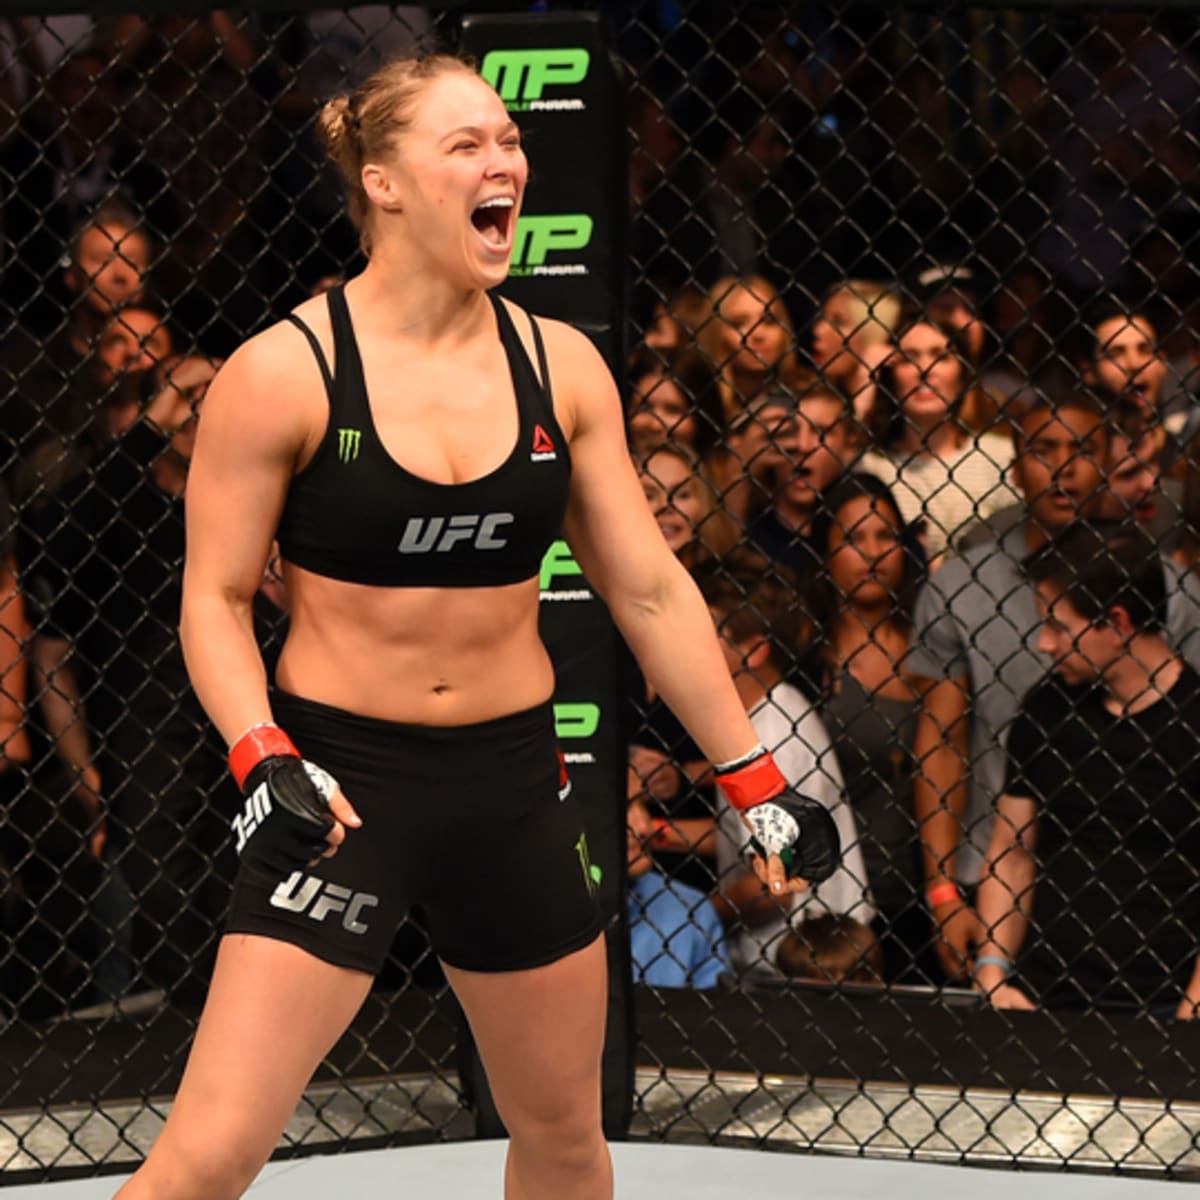 Pic: UFC Women's Champion Ronda Rousey on cover of ESPN Magazine